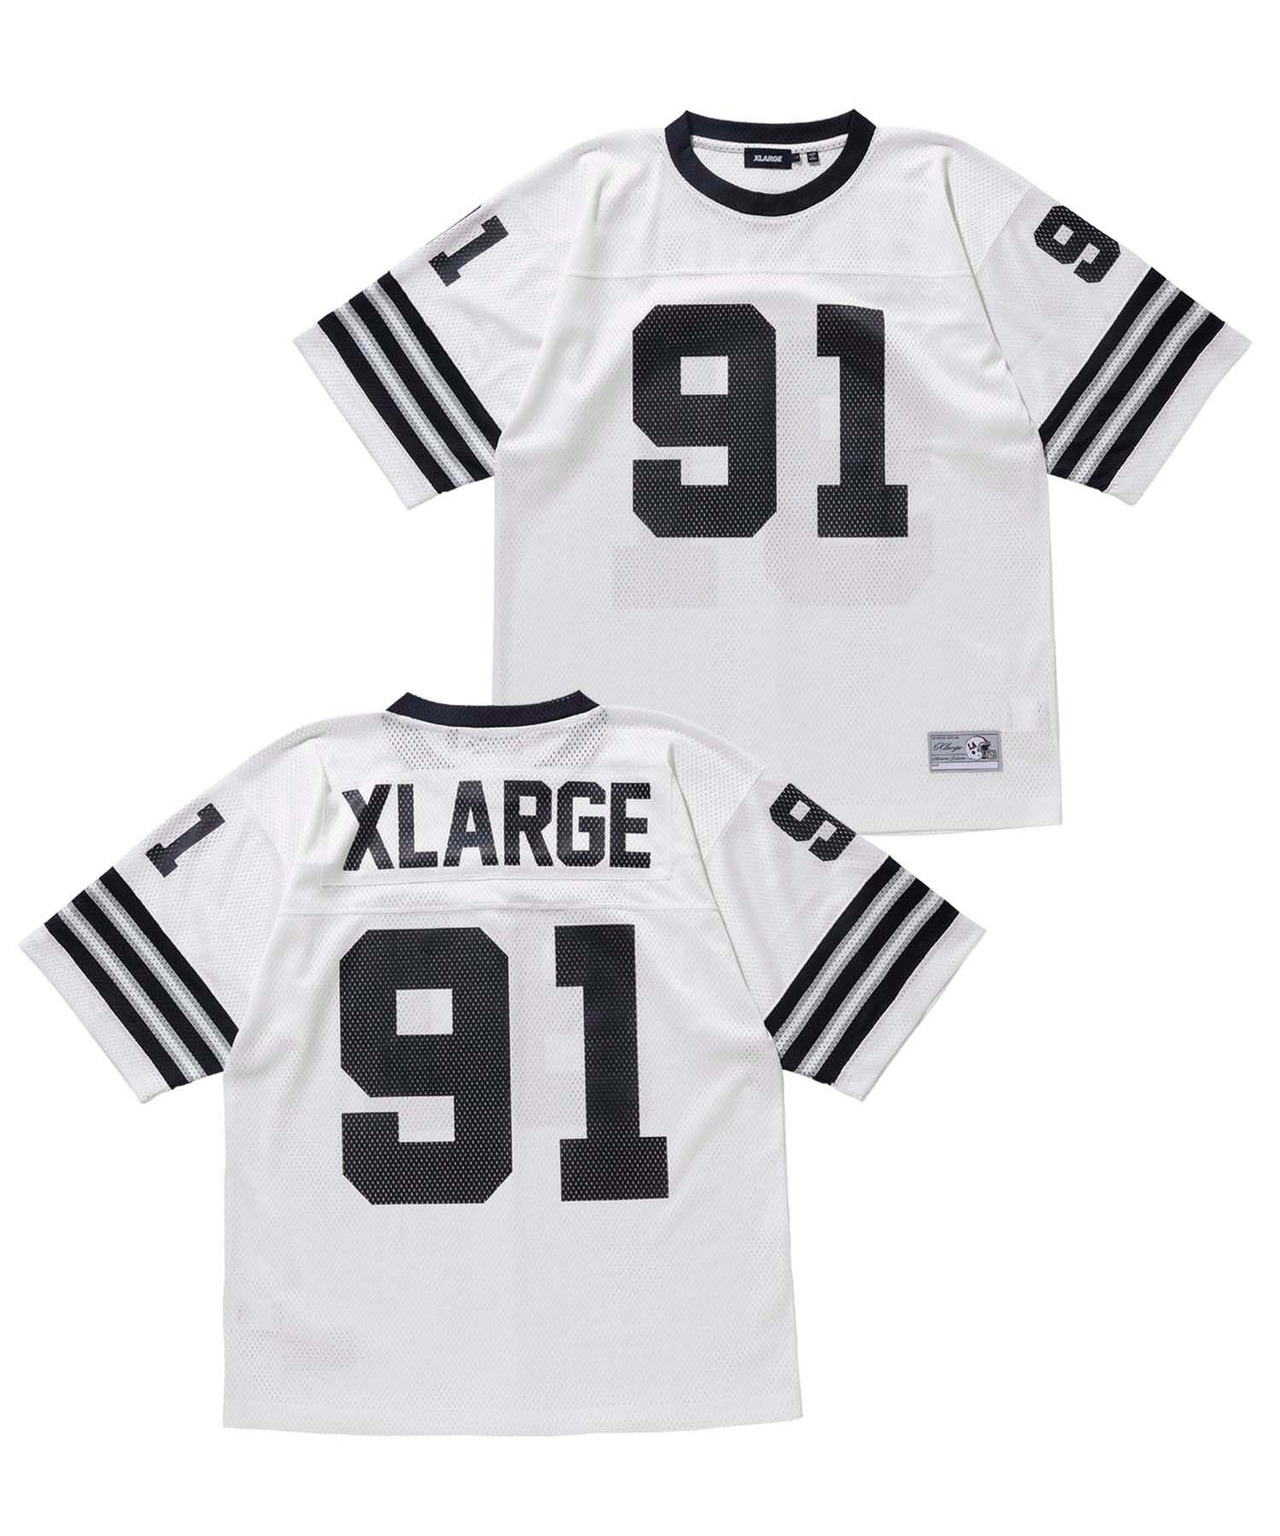 【XLARGE】XLARGE GAME SHIRT【エクストララージ】